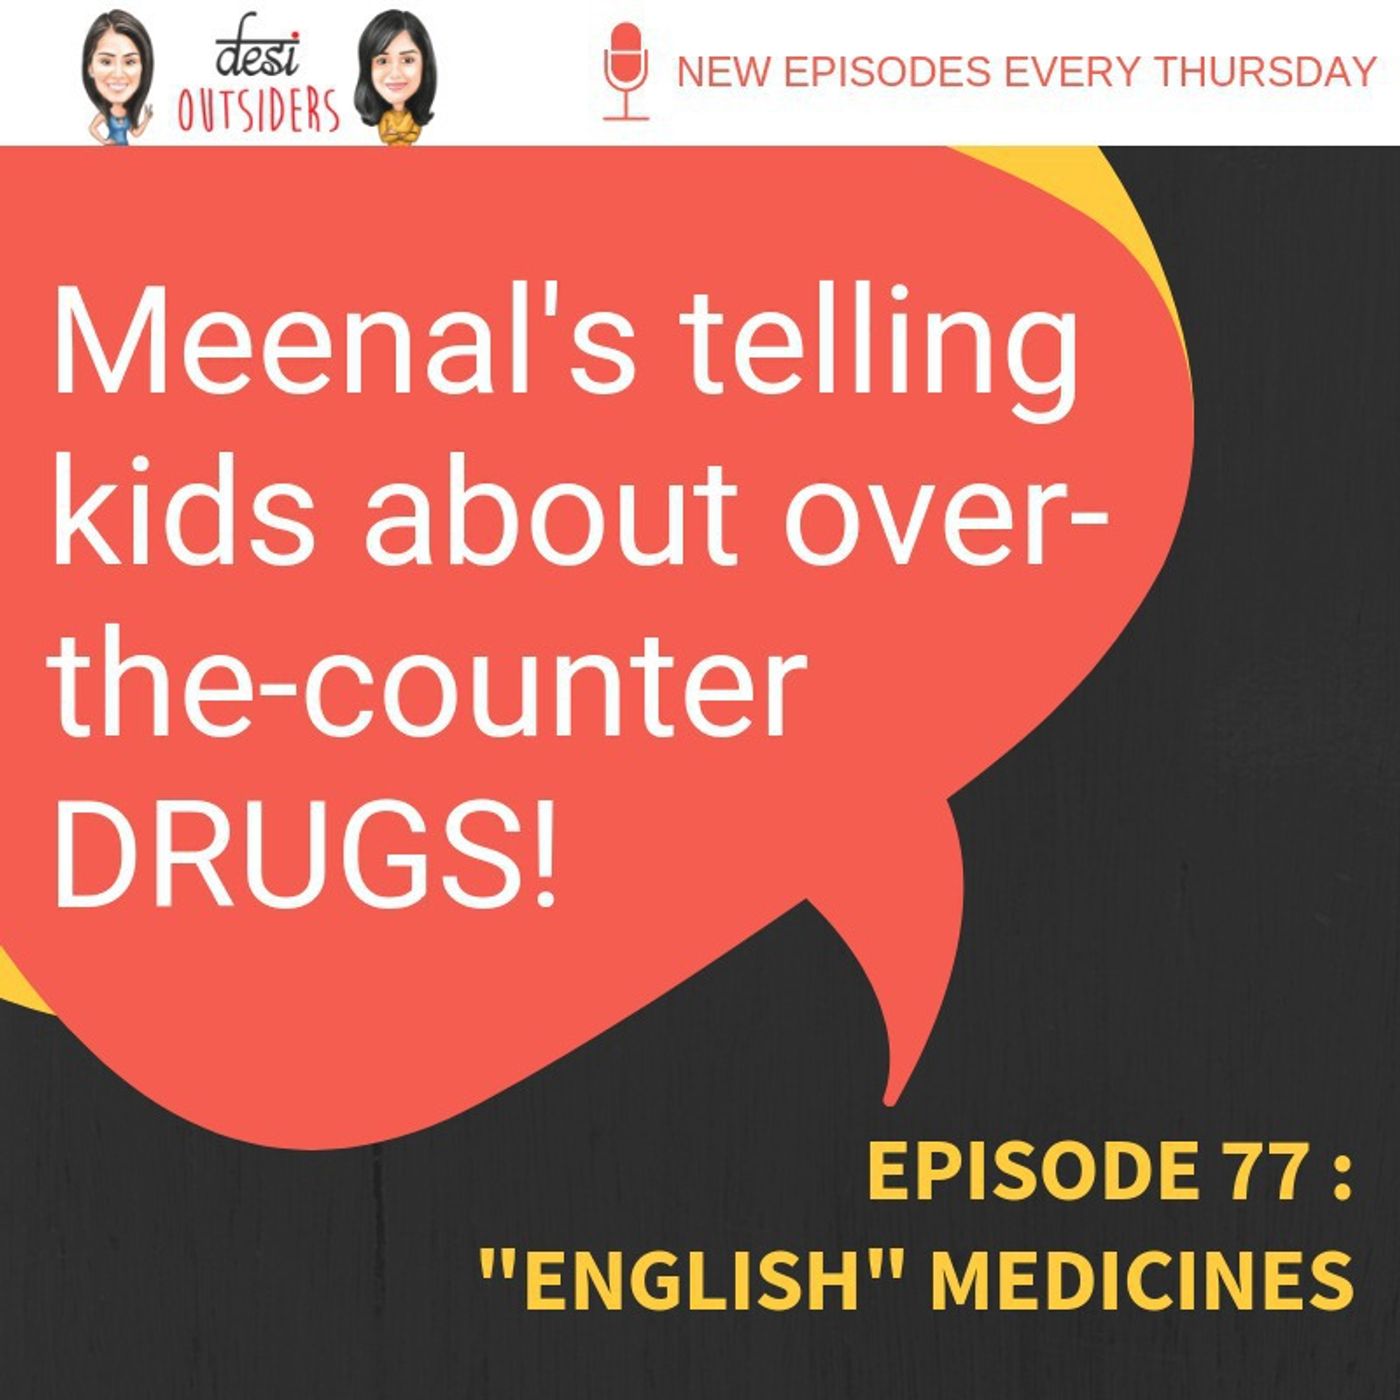 S5 Ep23: Episode 77 - "English" Medicines